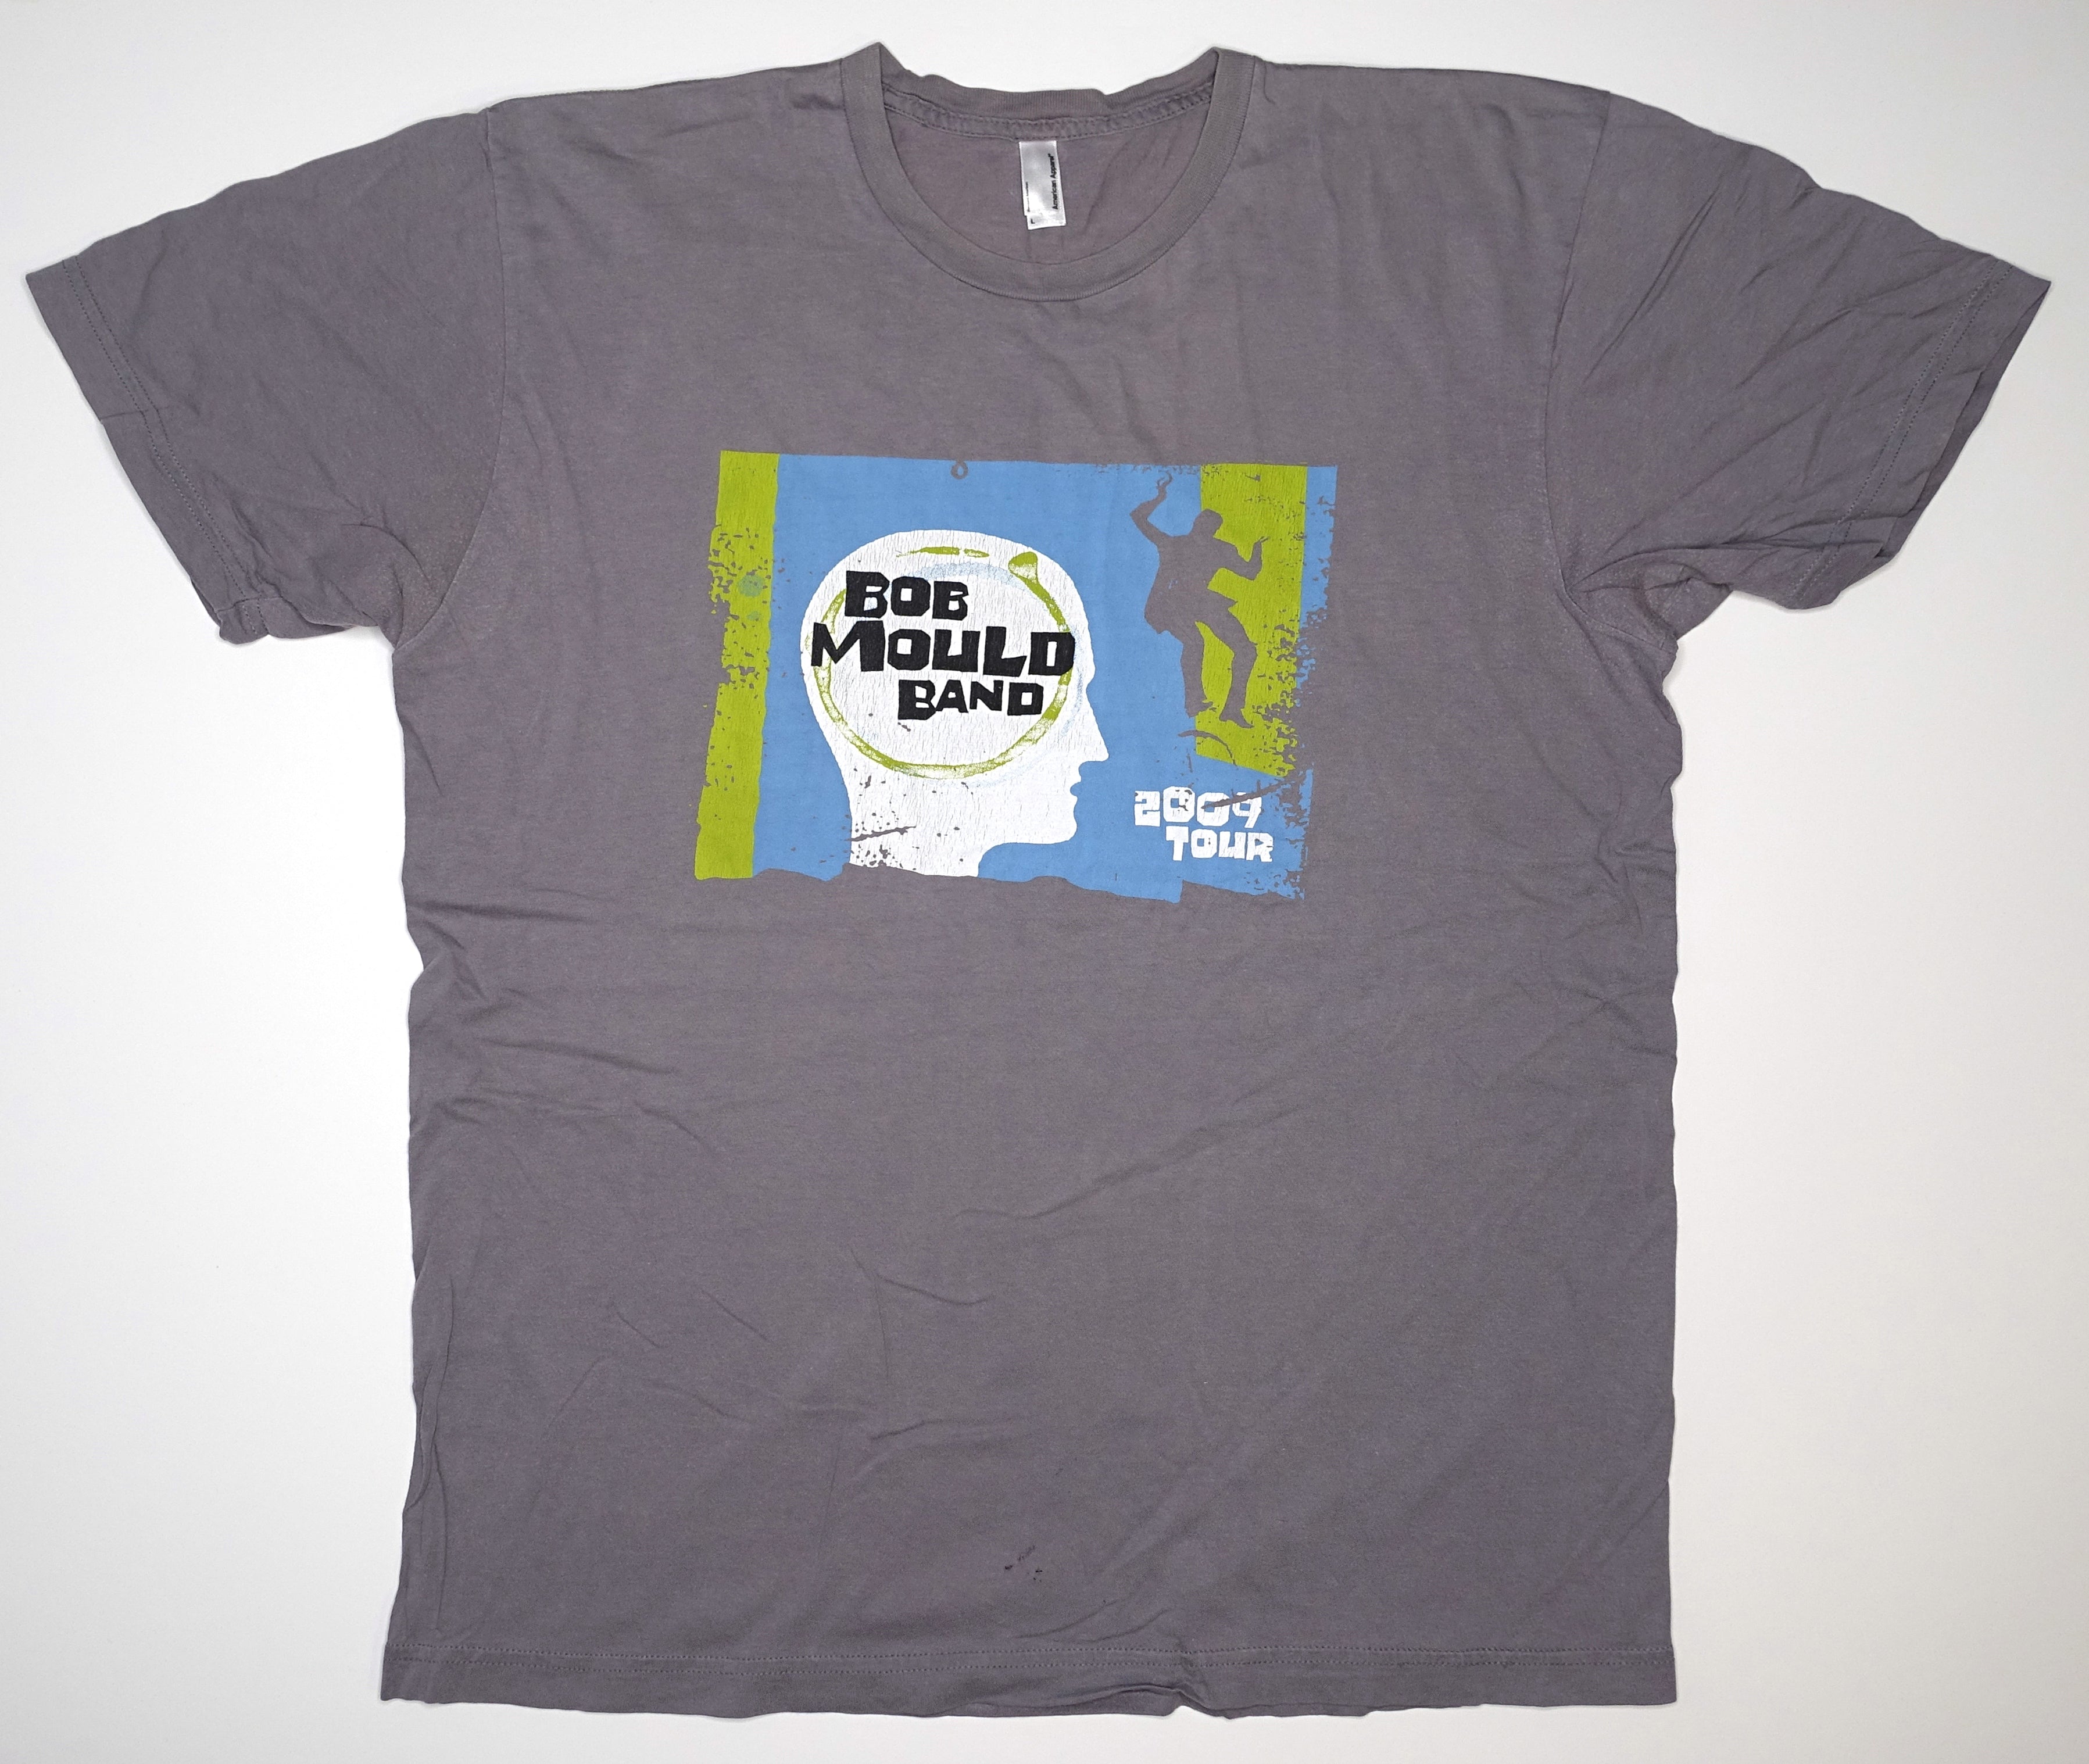 Bob Mould - Life And Times 2009 Tour Shirt Size Large